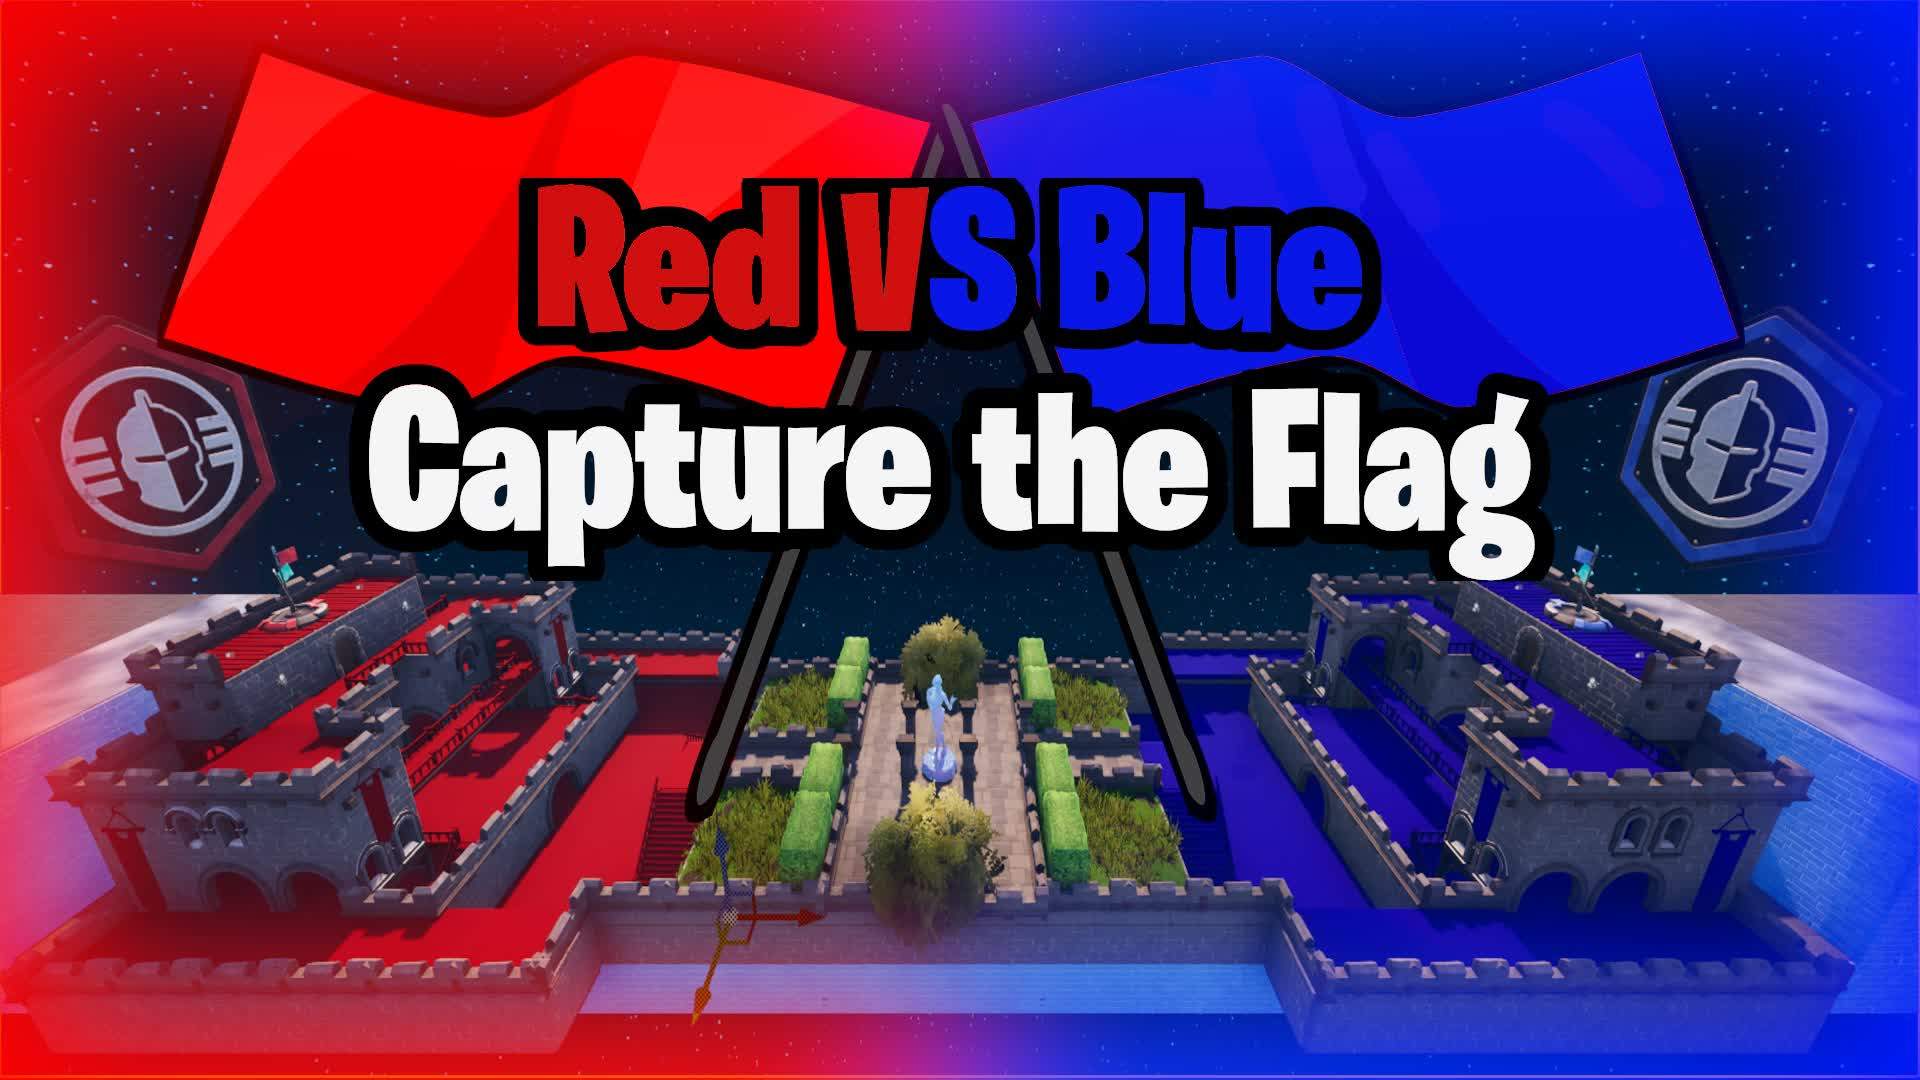 CRAZY RED 🔴 VS BLUE 🔵 CAPTURE THE FLAG